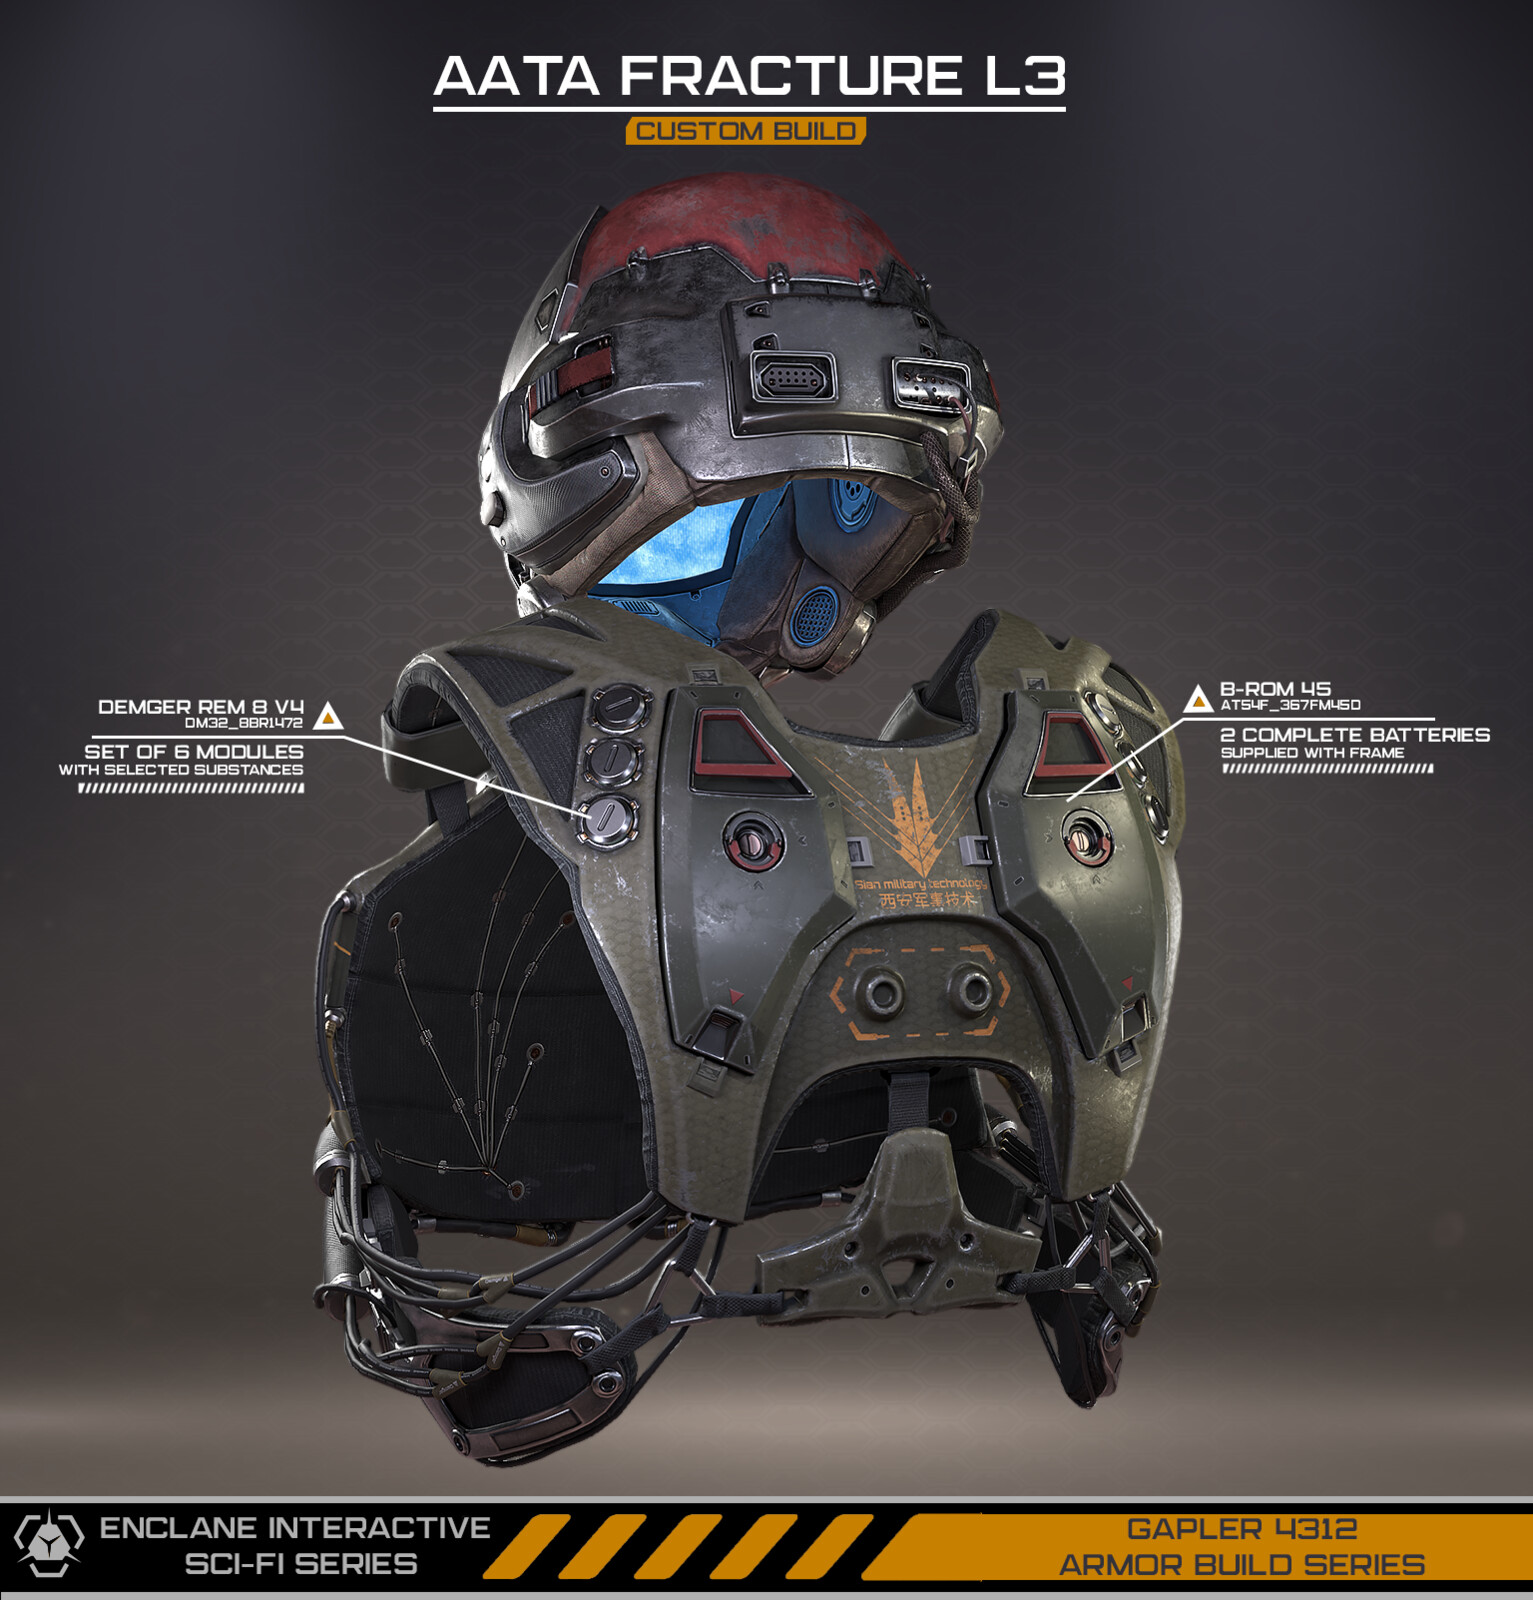 AATA custom build  with helmet Back view